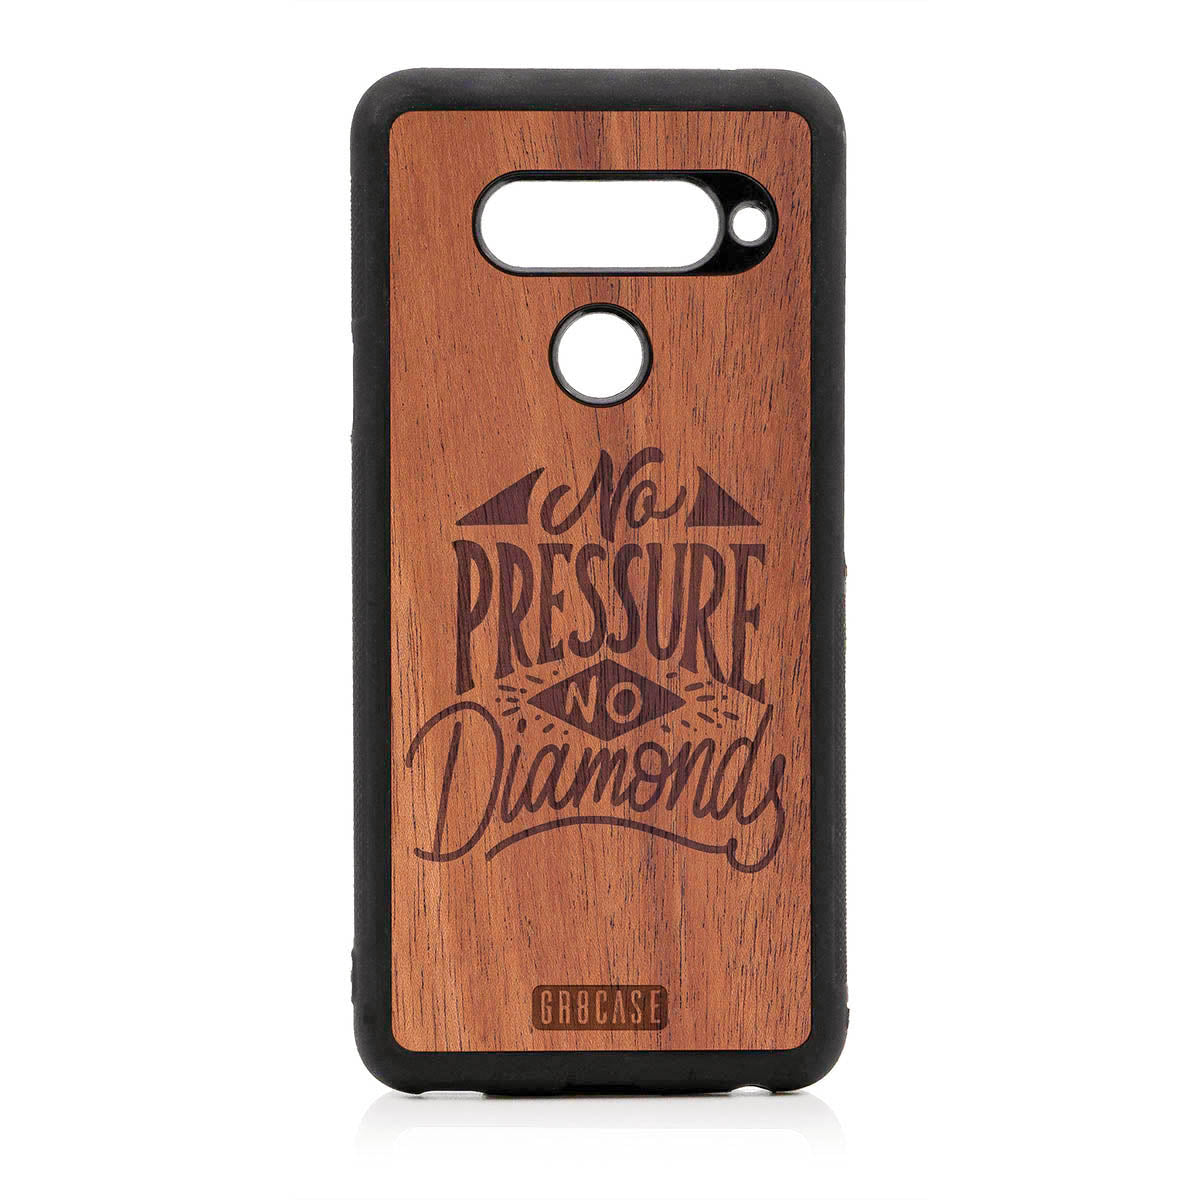 No Pressure No Diamonds Design Wood Case For LG V40